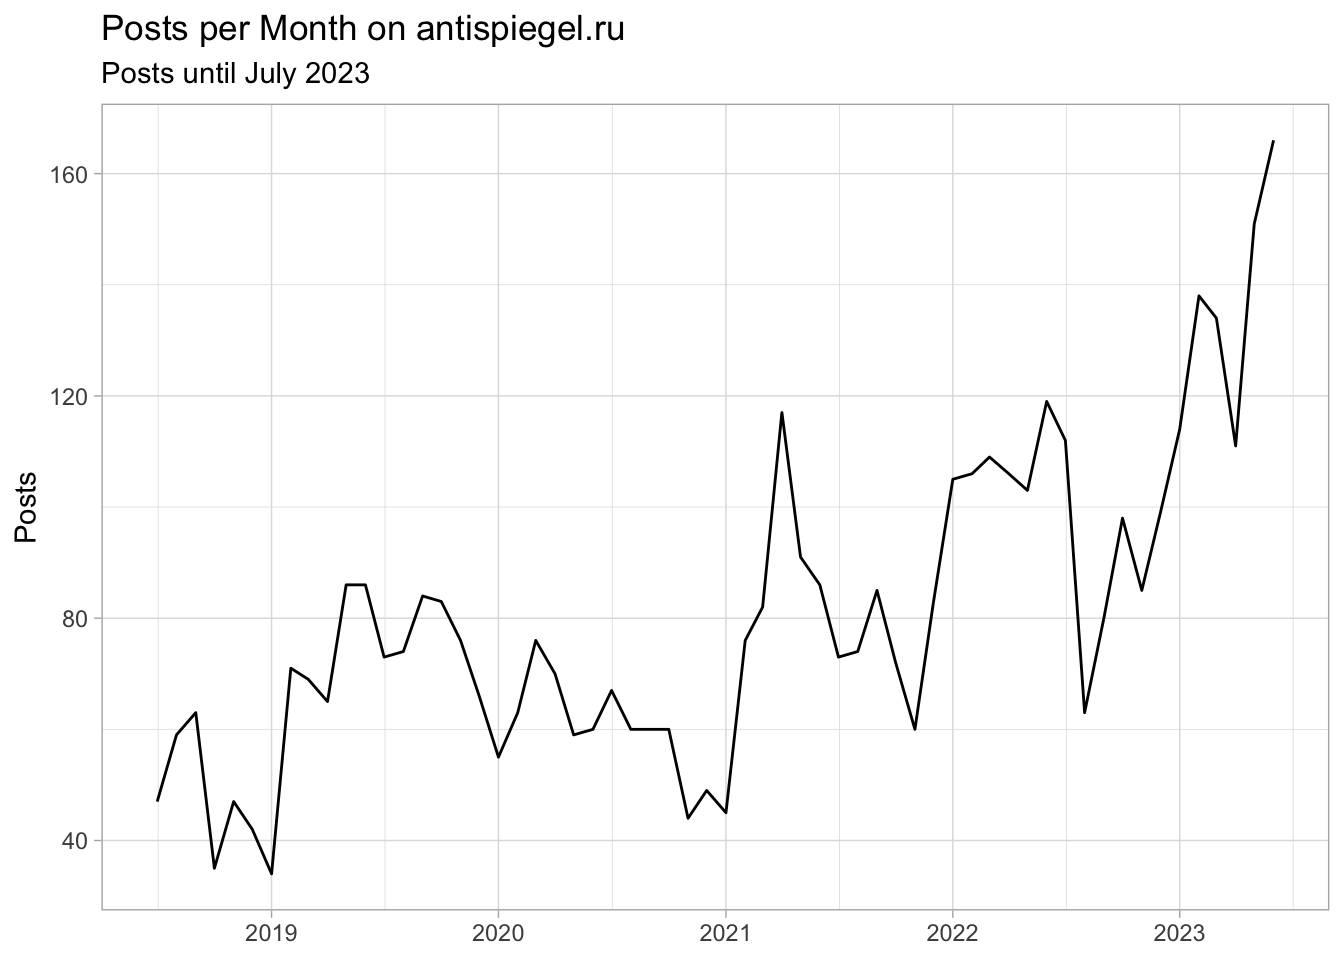 Number of article per month on the german pro-russion propaganda website antispiegel.ru by Thomas Röper